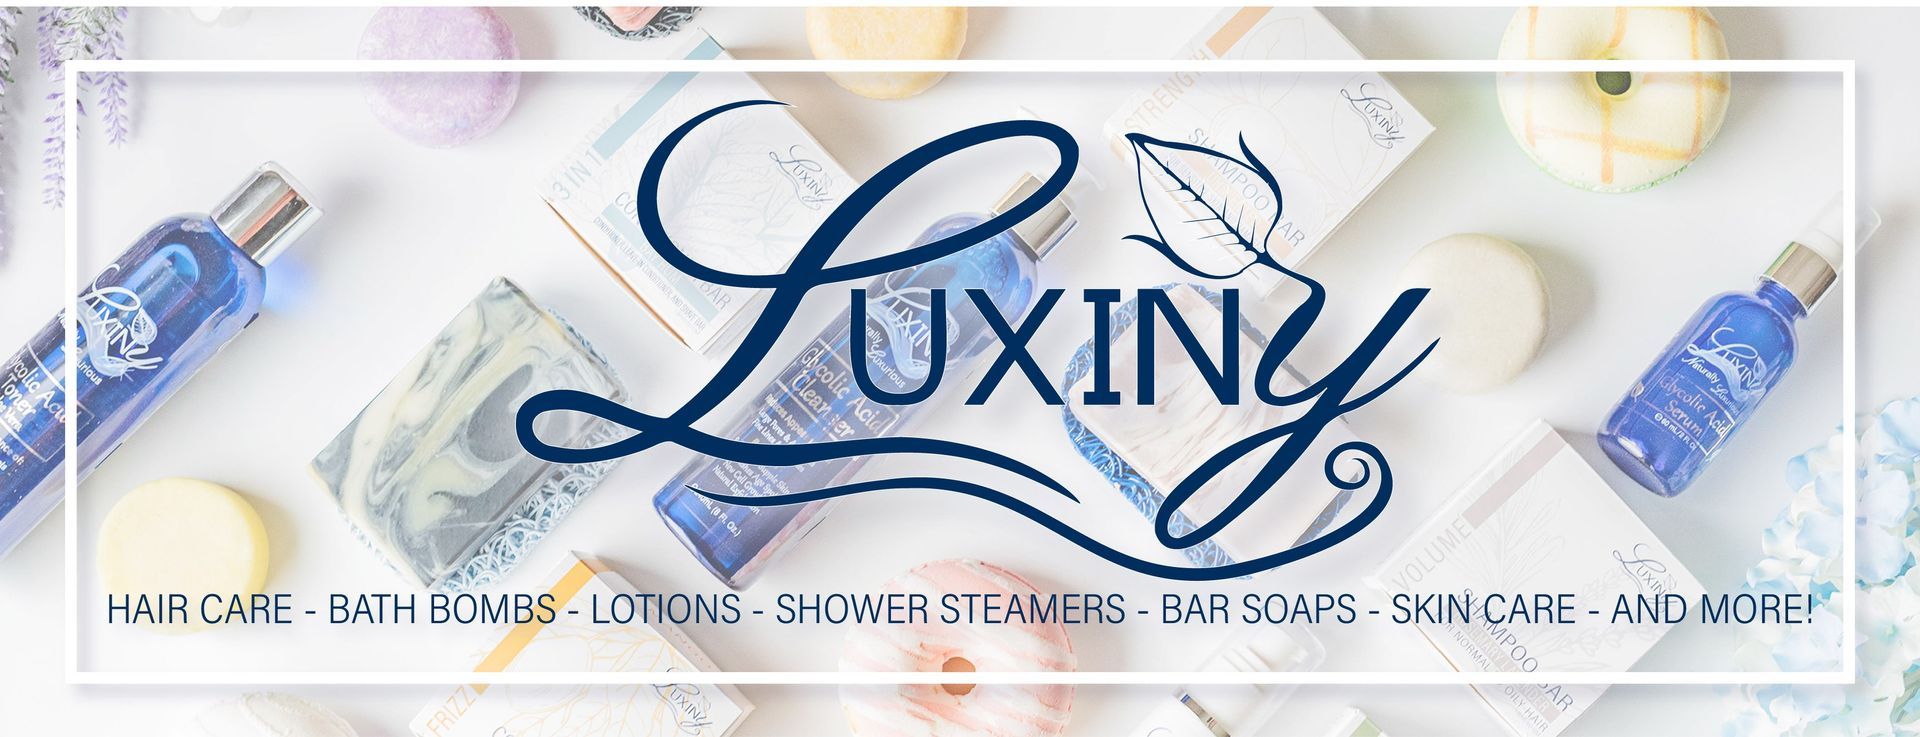 Luxiny skincare  & bath treatments